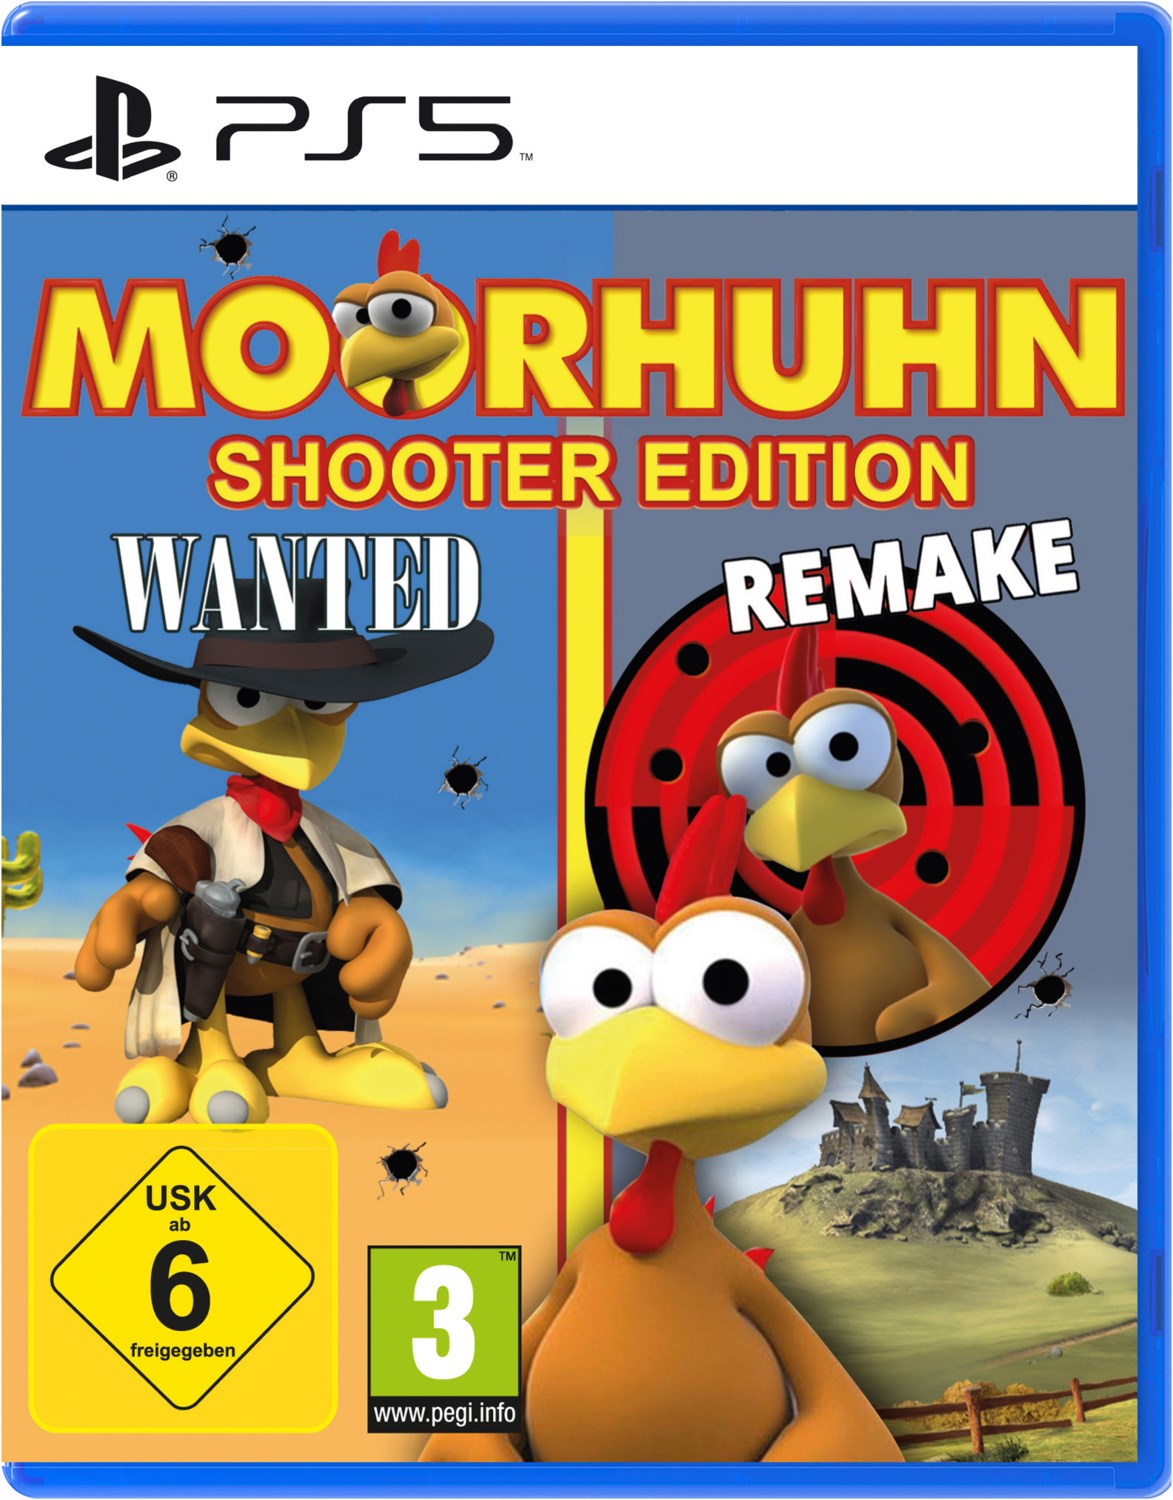 Moorhuhn Shooter Edition von Software Pyramide